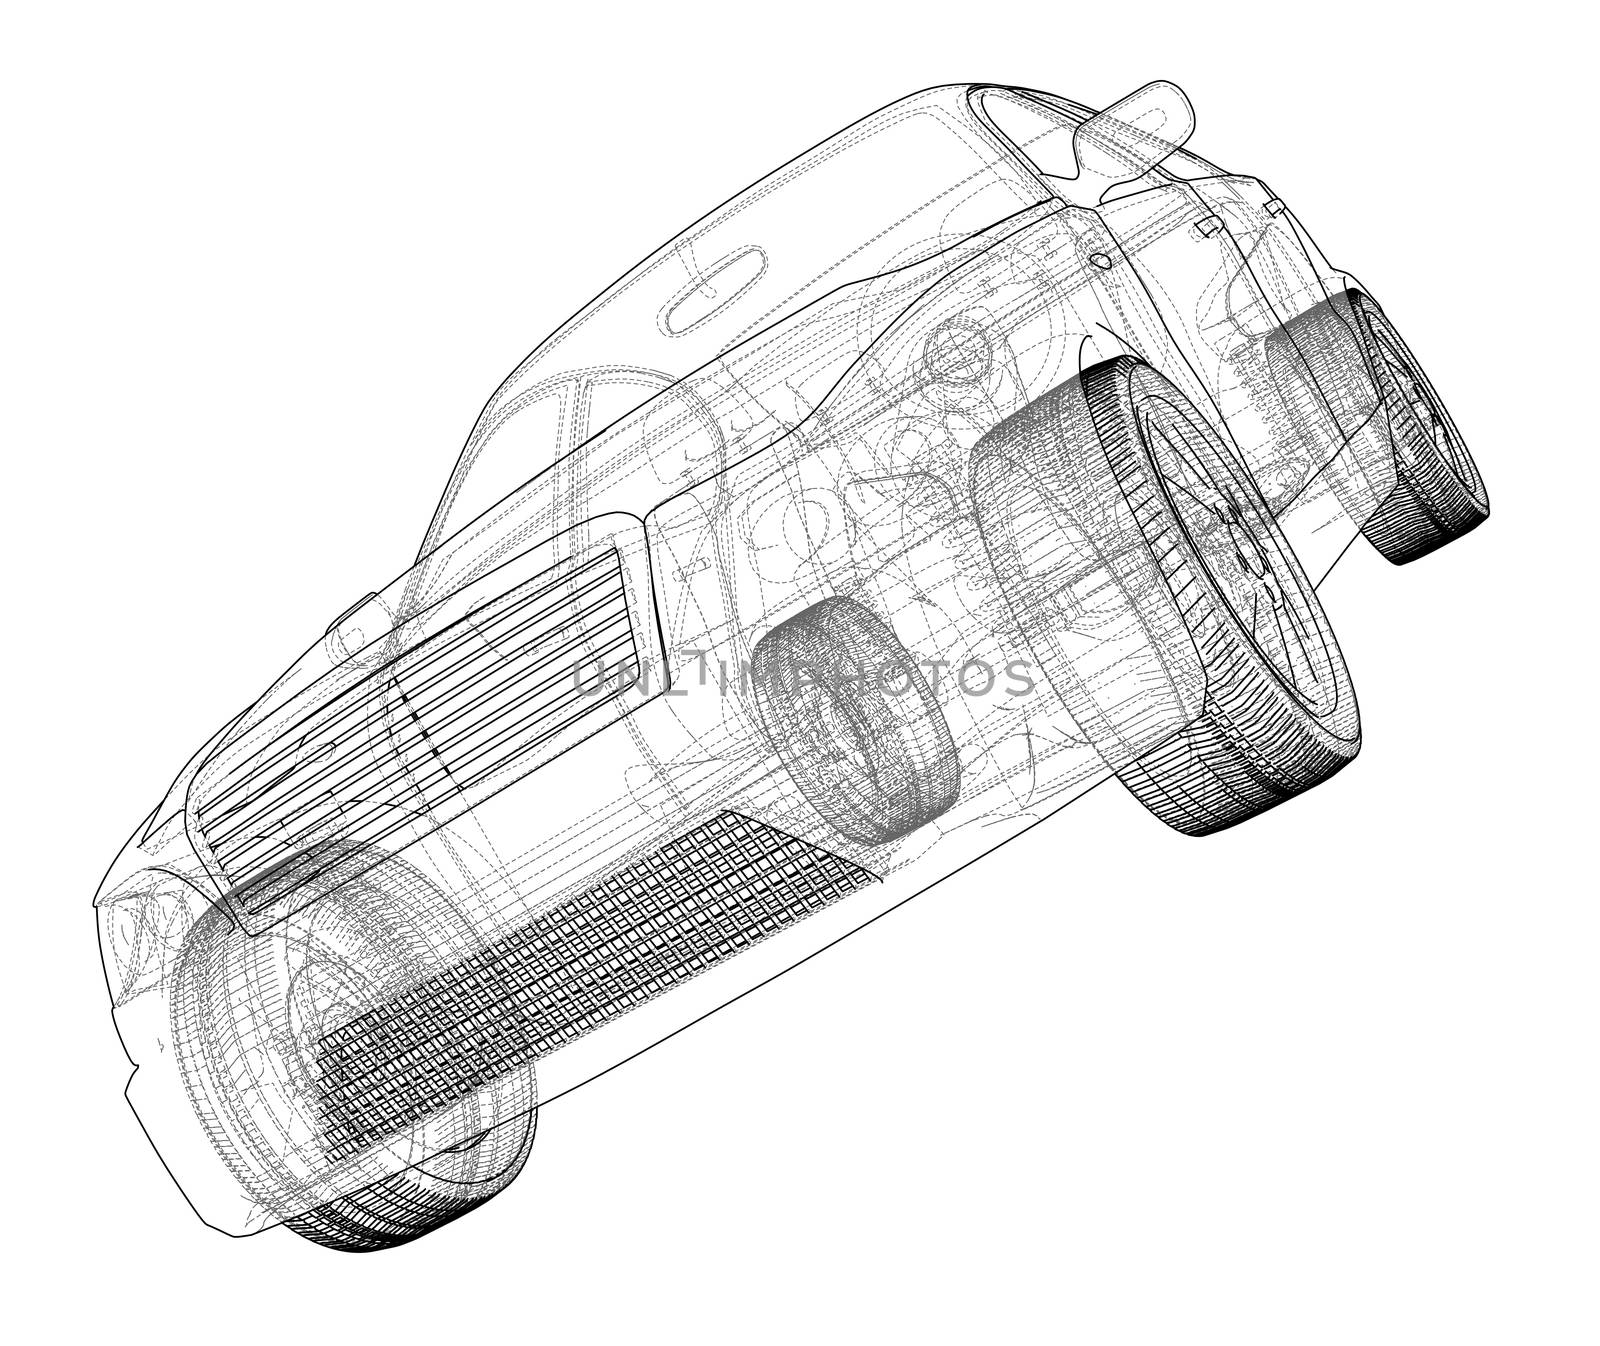 Concept car 3d illustration. Wire-frame or outline style